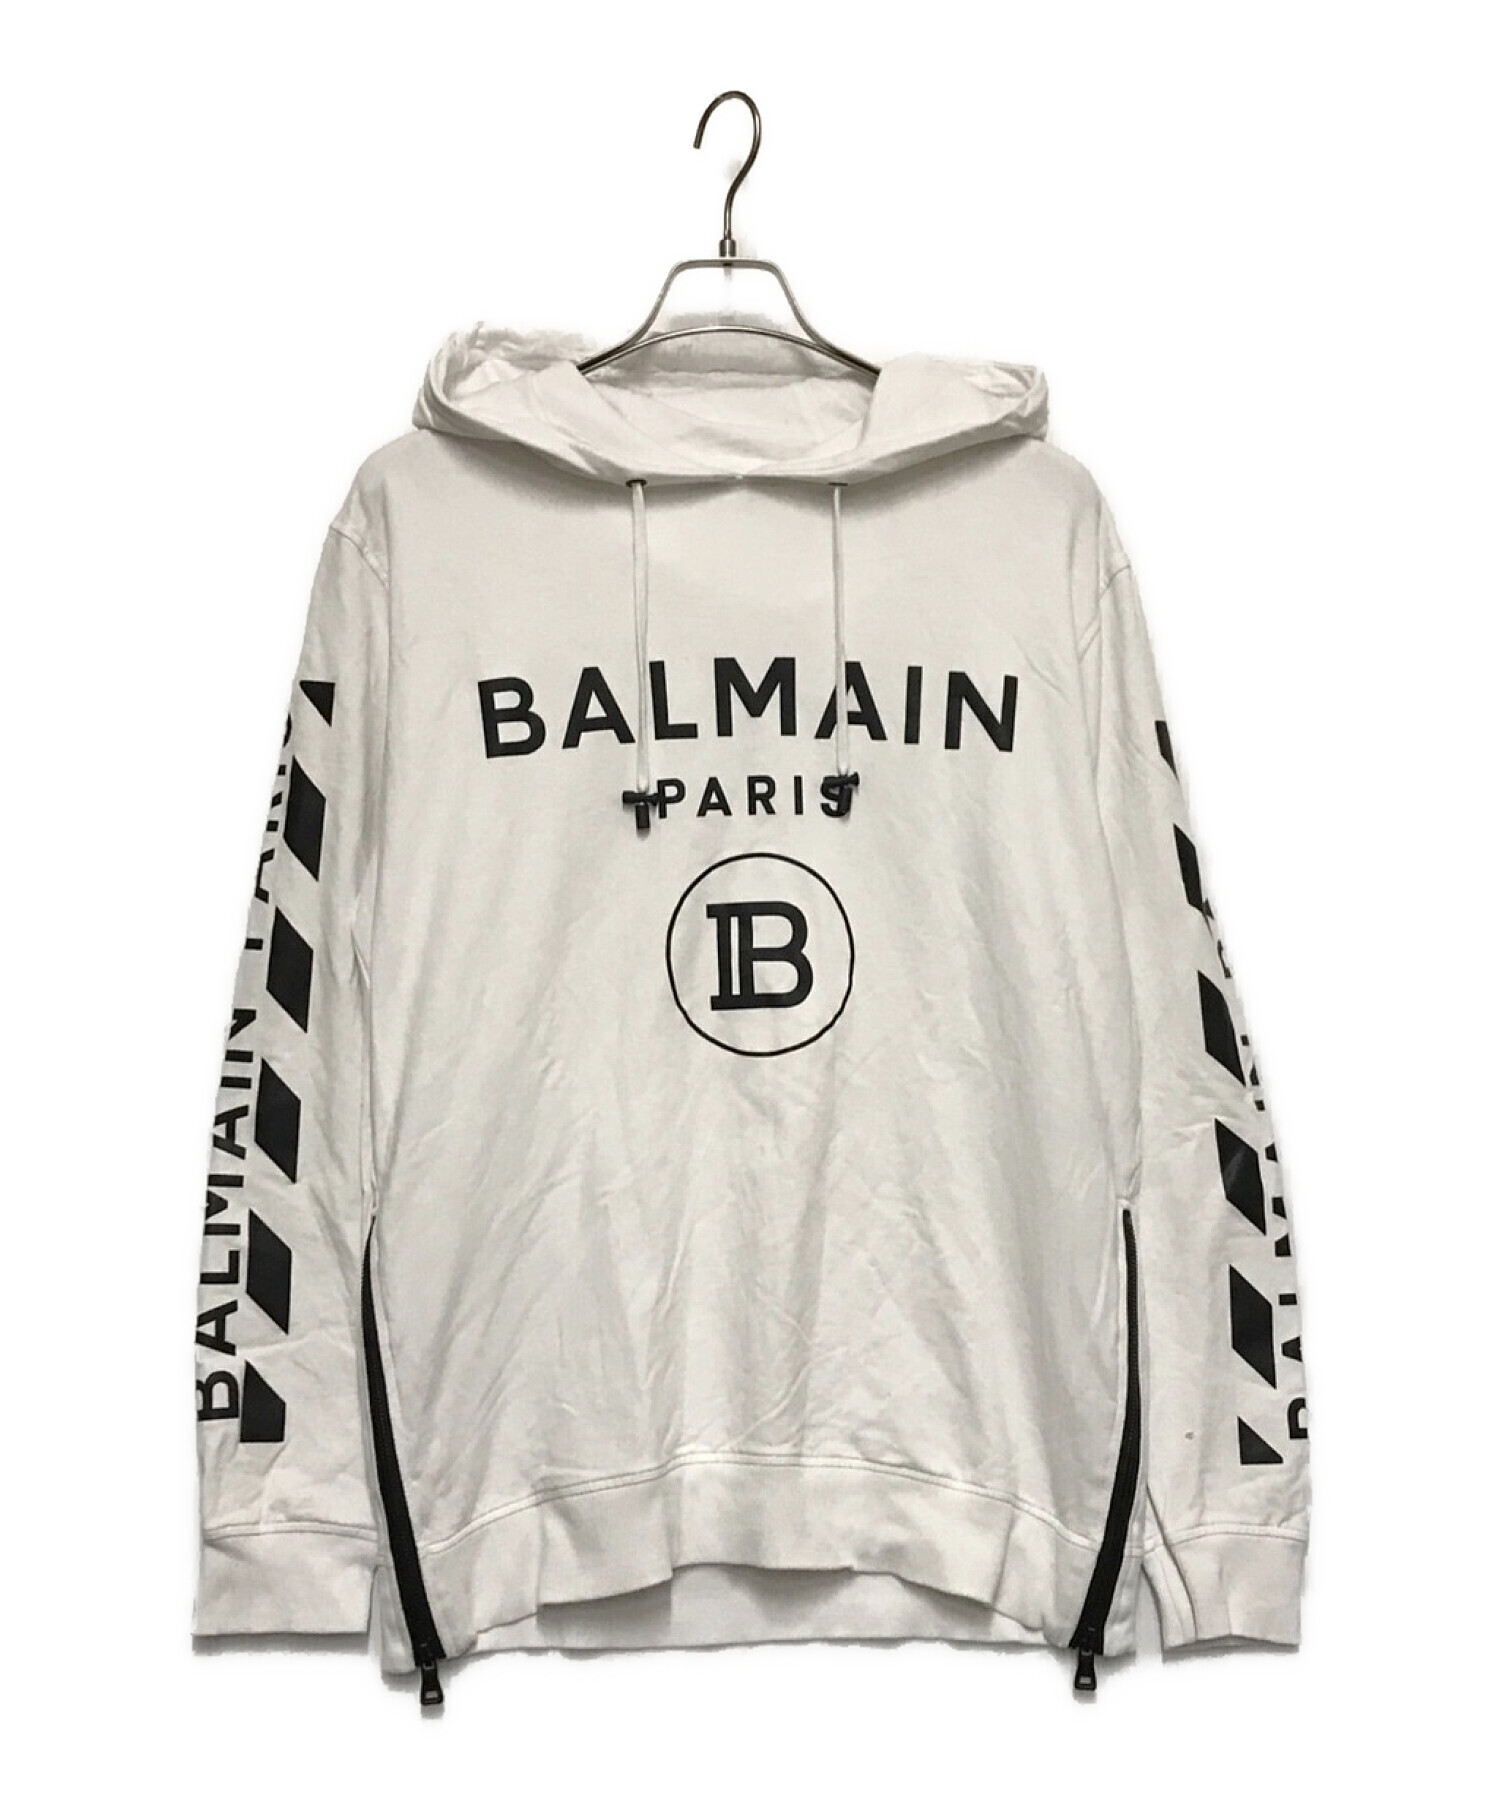 BALMAIN (バルマン) ロゴプリントパーカー ホワイト サイズ:L